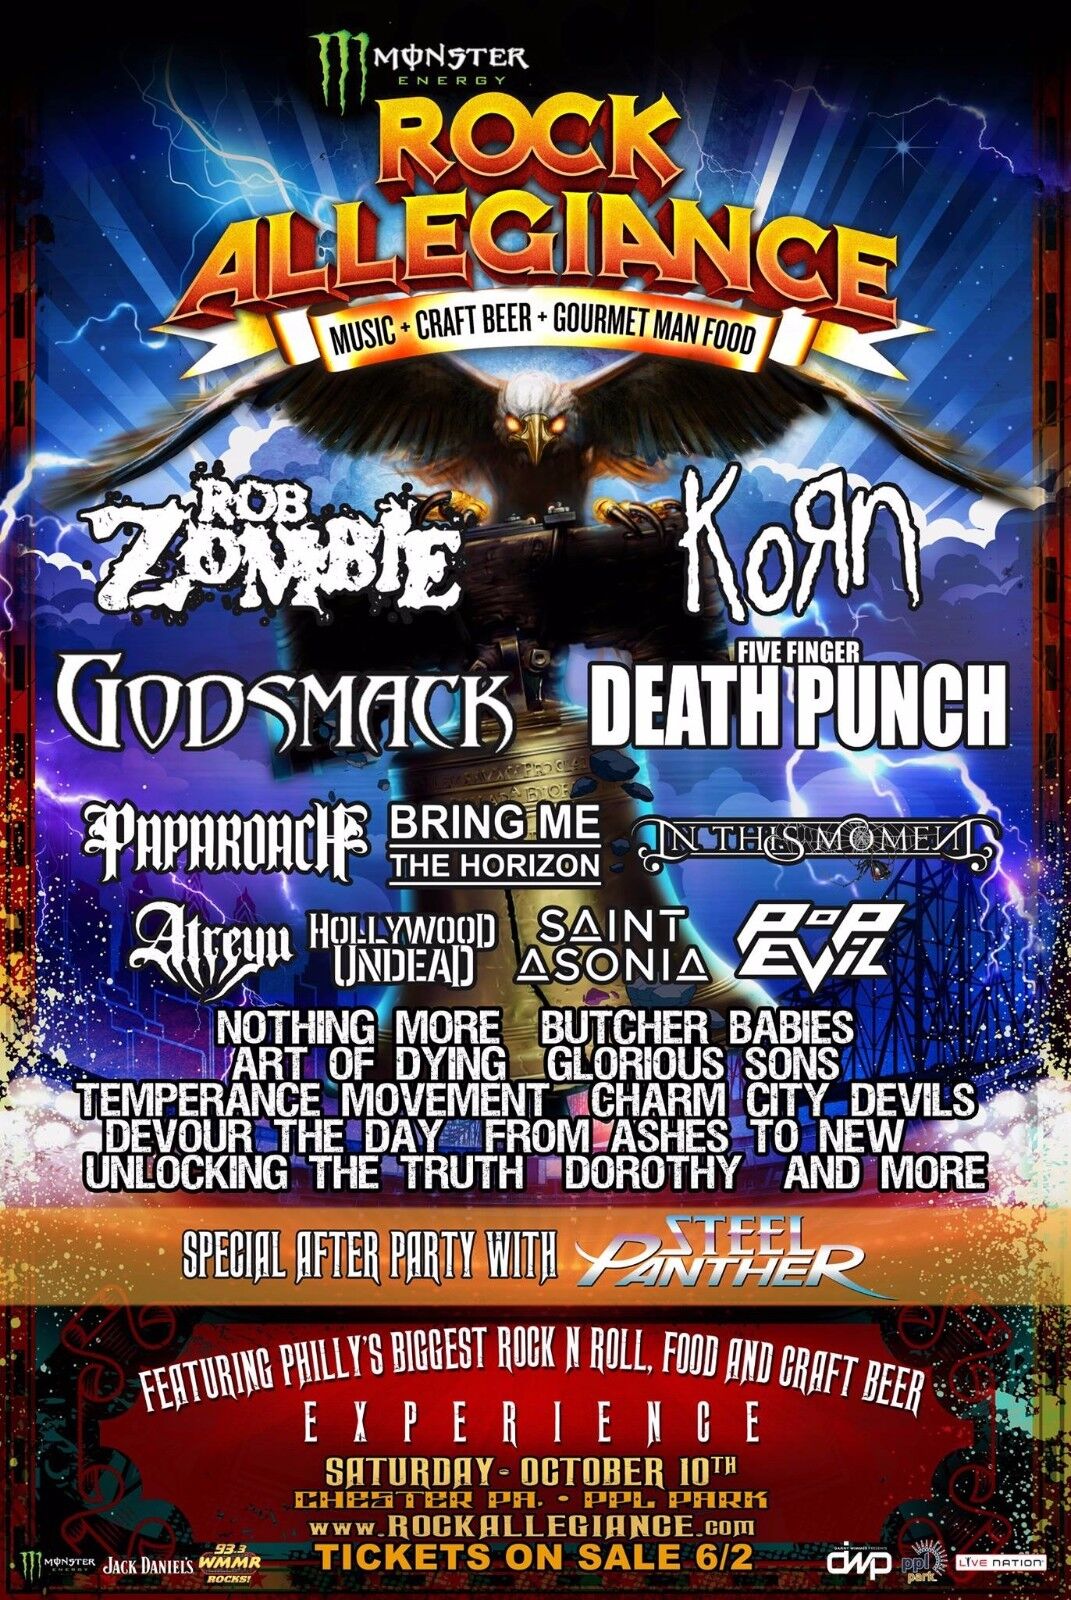 Rock Allegiance 2015 Philadelphia Concert Tour Poster: Rob Zombie,korn,godsmack